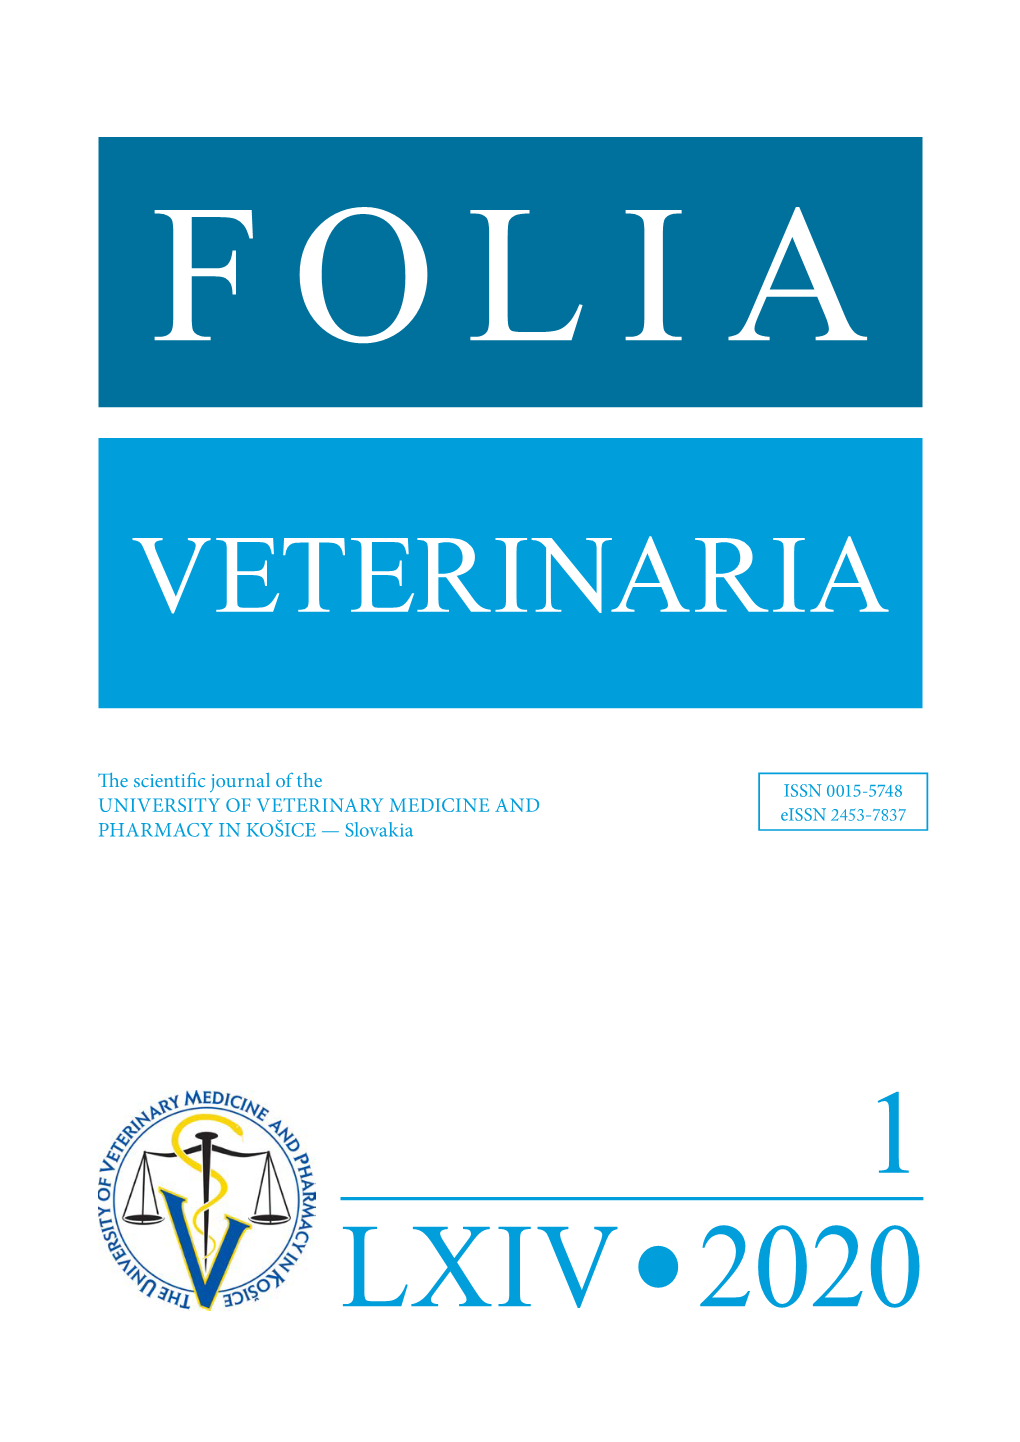 FOLIA VETERINARIA Is a Scientific Journal Issued by the University of Veterinary Medicine and Pharmacy in Košice, Komenského 73, 041 81 Košice, Slovakia